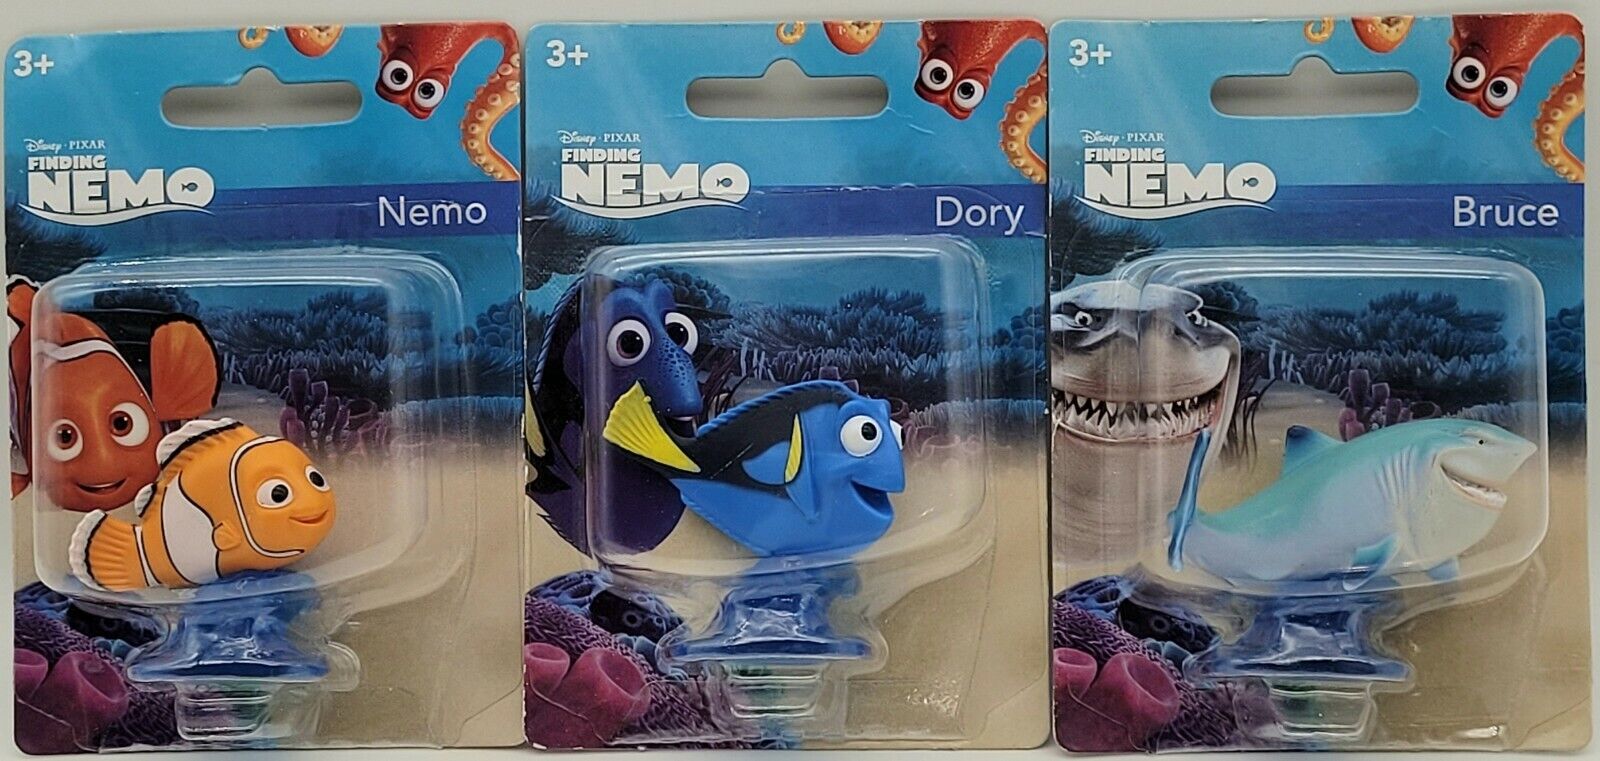 Finding Nemo Collectable Figurines Nemo Dory Bruce Disney Pixar Lot Of 3